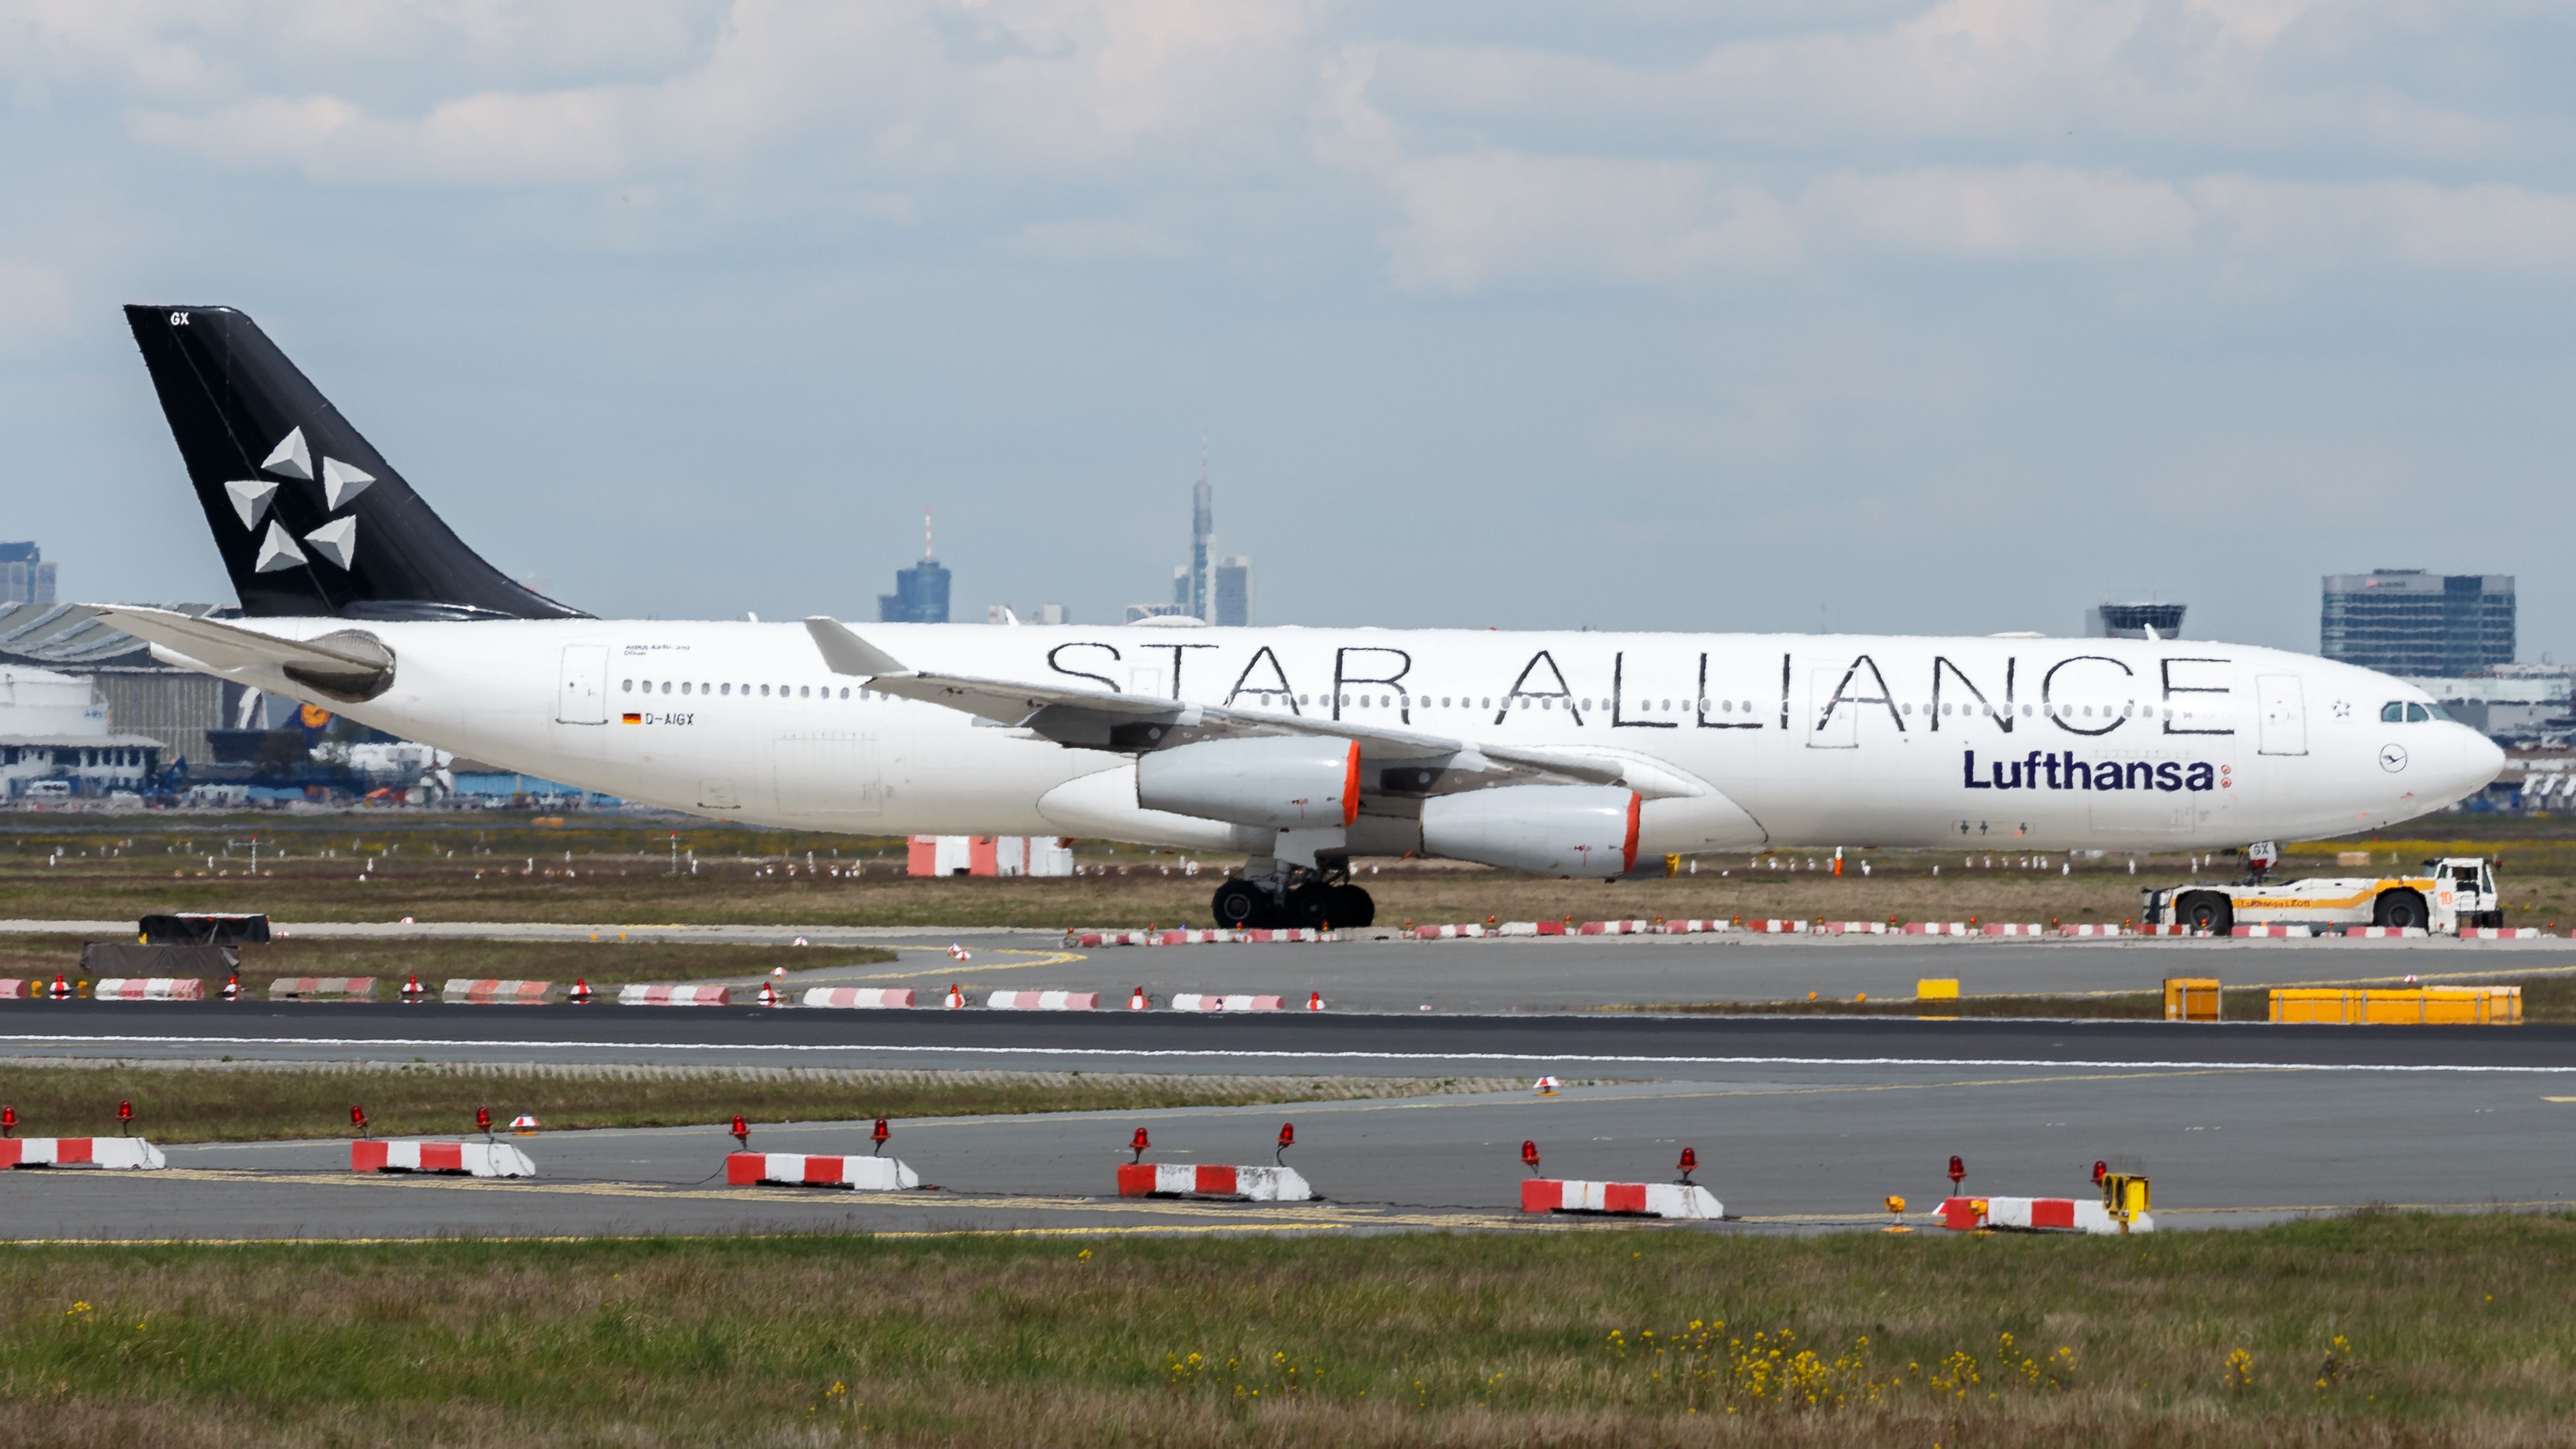 Lufthansa_(Star_Alliance_livery)_Airbus_A340-300_(D-AIGX)_at_Frankfurt_Airport